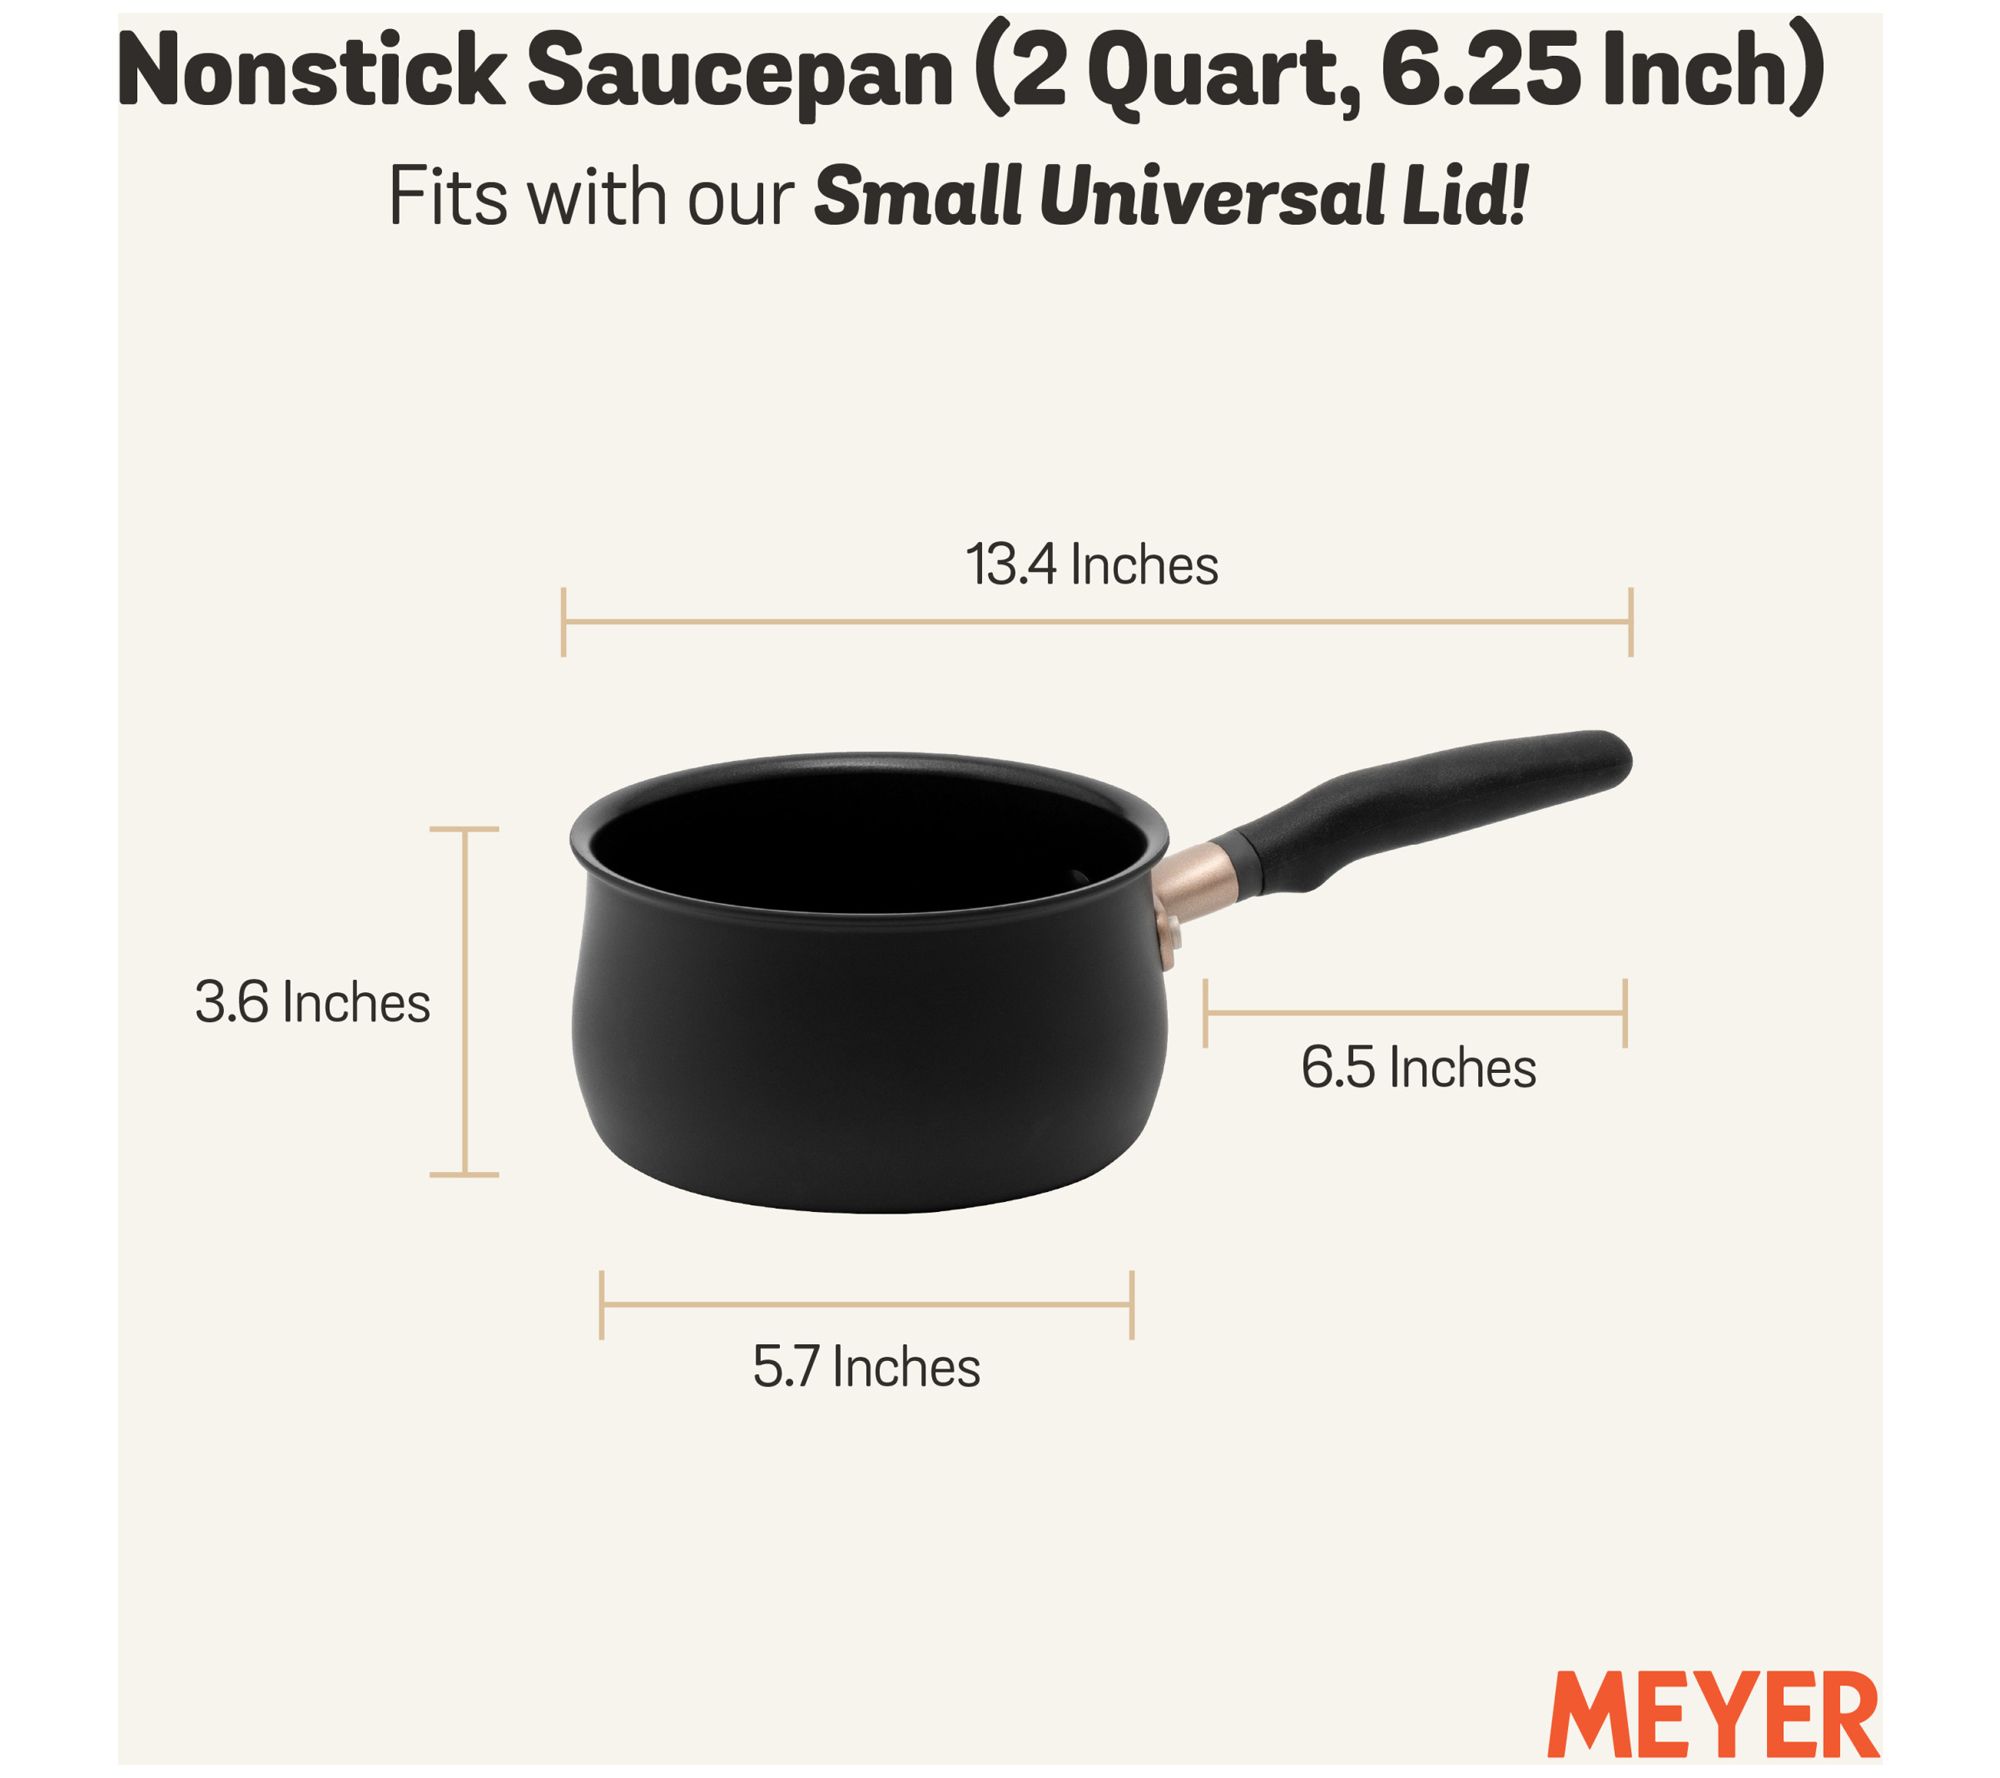 Meyer Accent Series 8 Ultra Durable Nonstick Frying Pan 